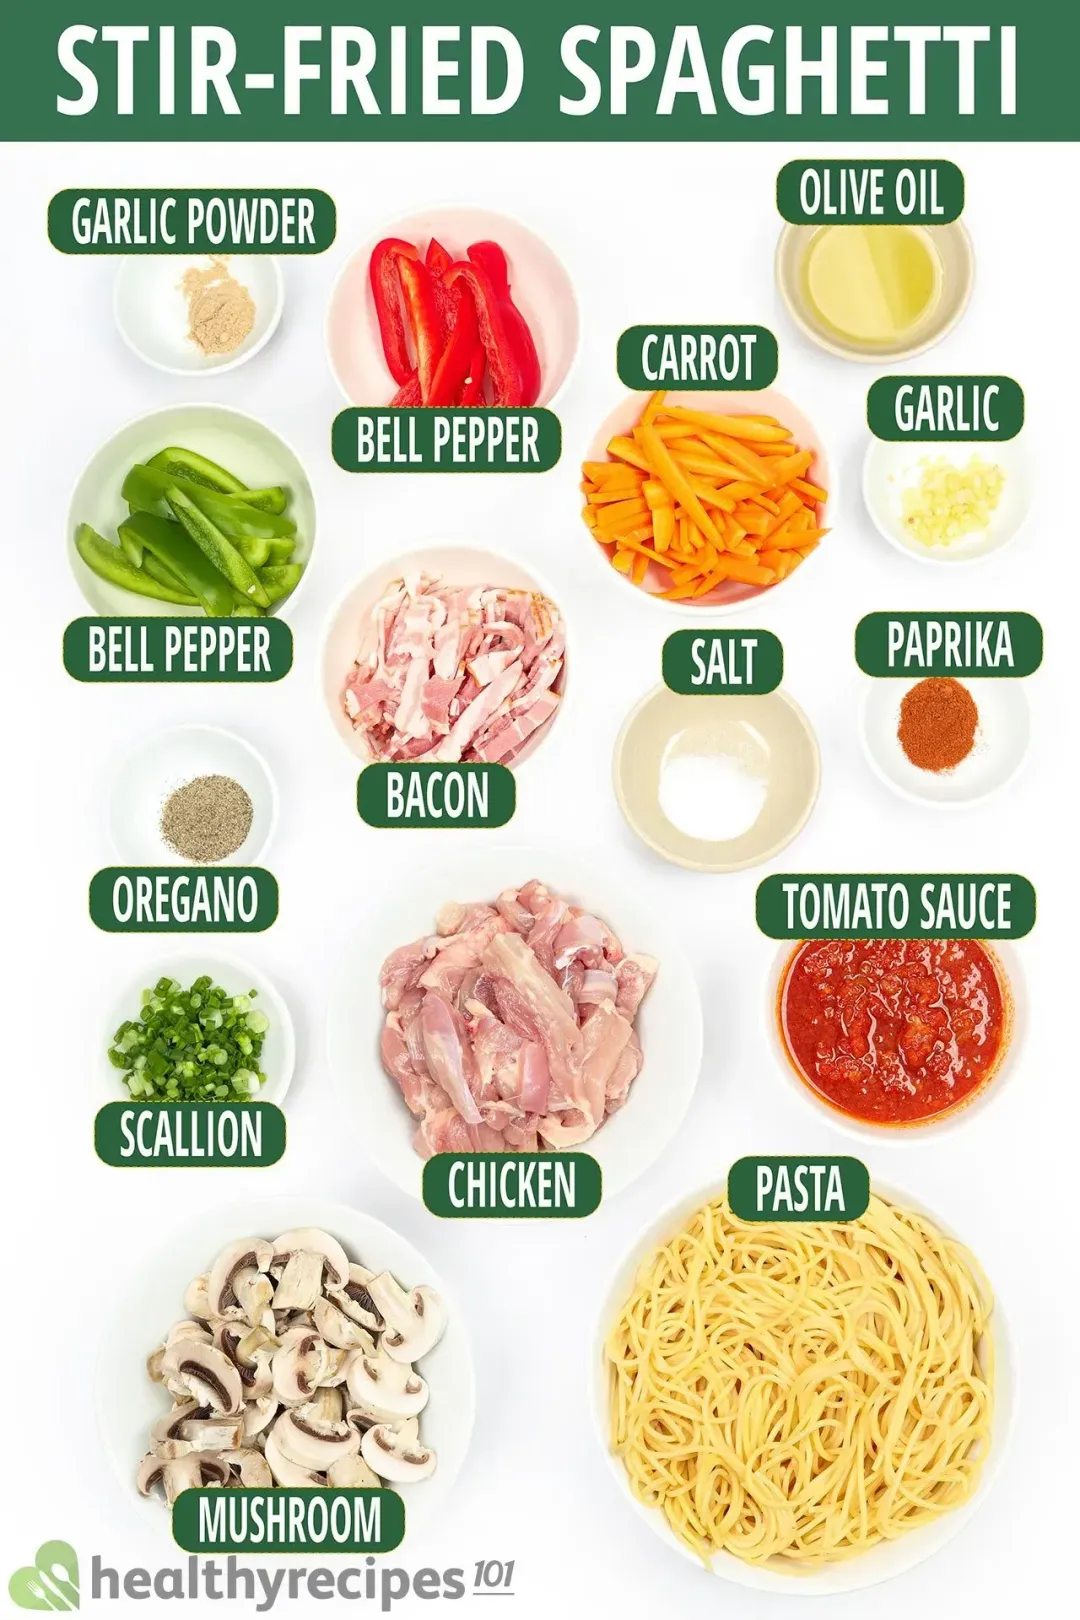 Ingredients for Stir fried Spaghetti